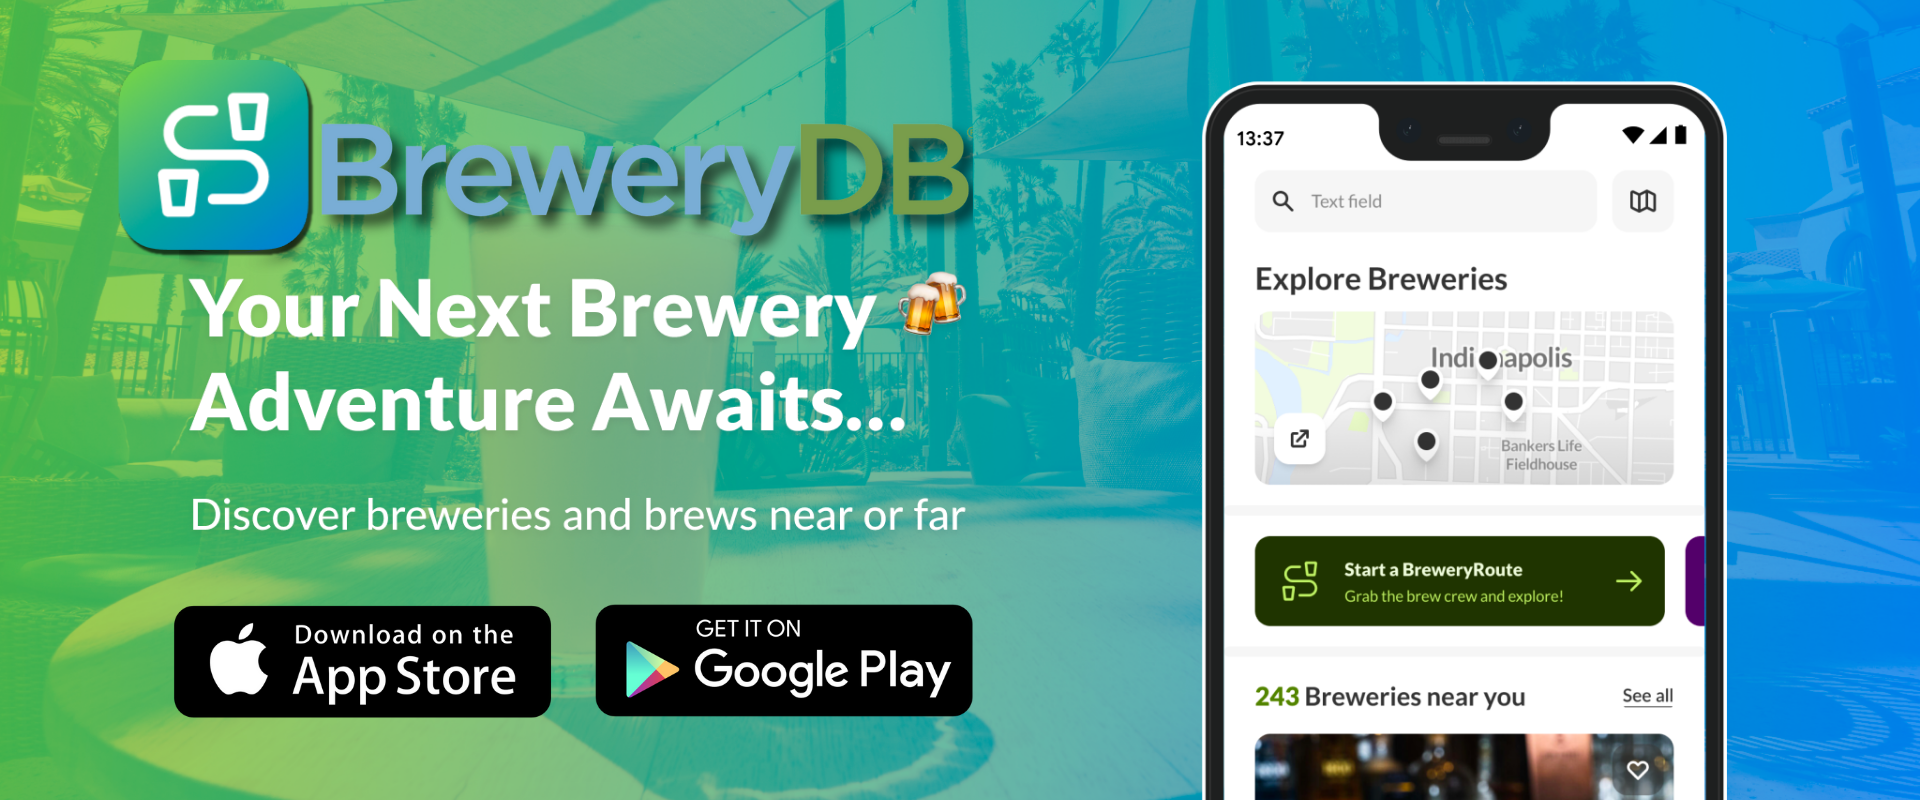 BreweryDB Mobile App